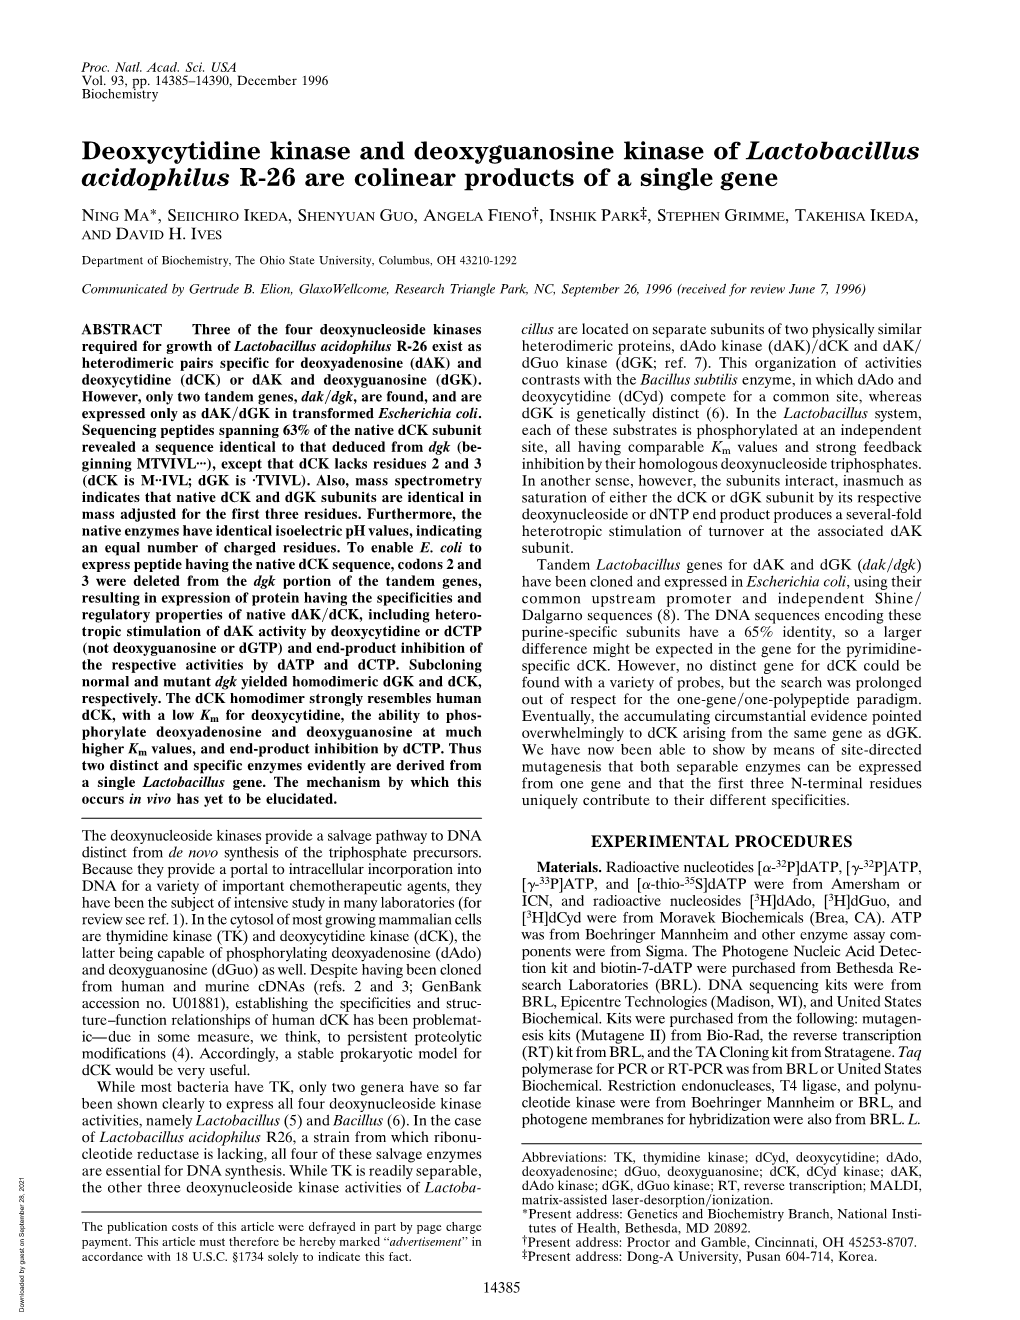 Deoxycytidine Kinase and Deoxyguanosine Kinase of Lactobacillus Acidophilus R-26 Are Colinear Products of a Single Gene